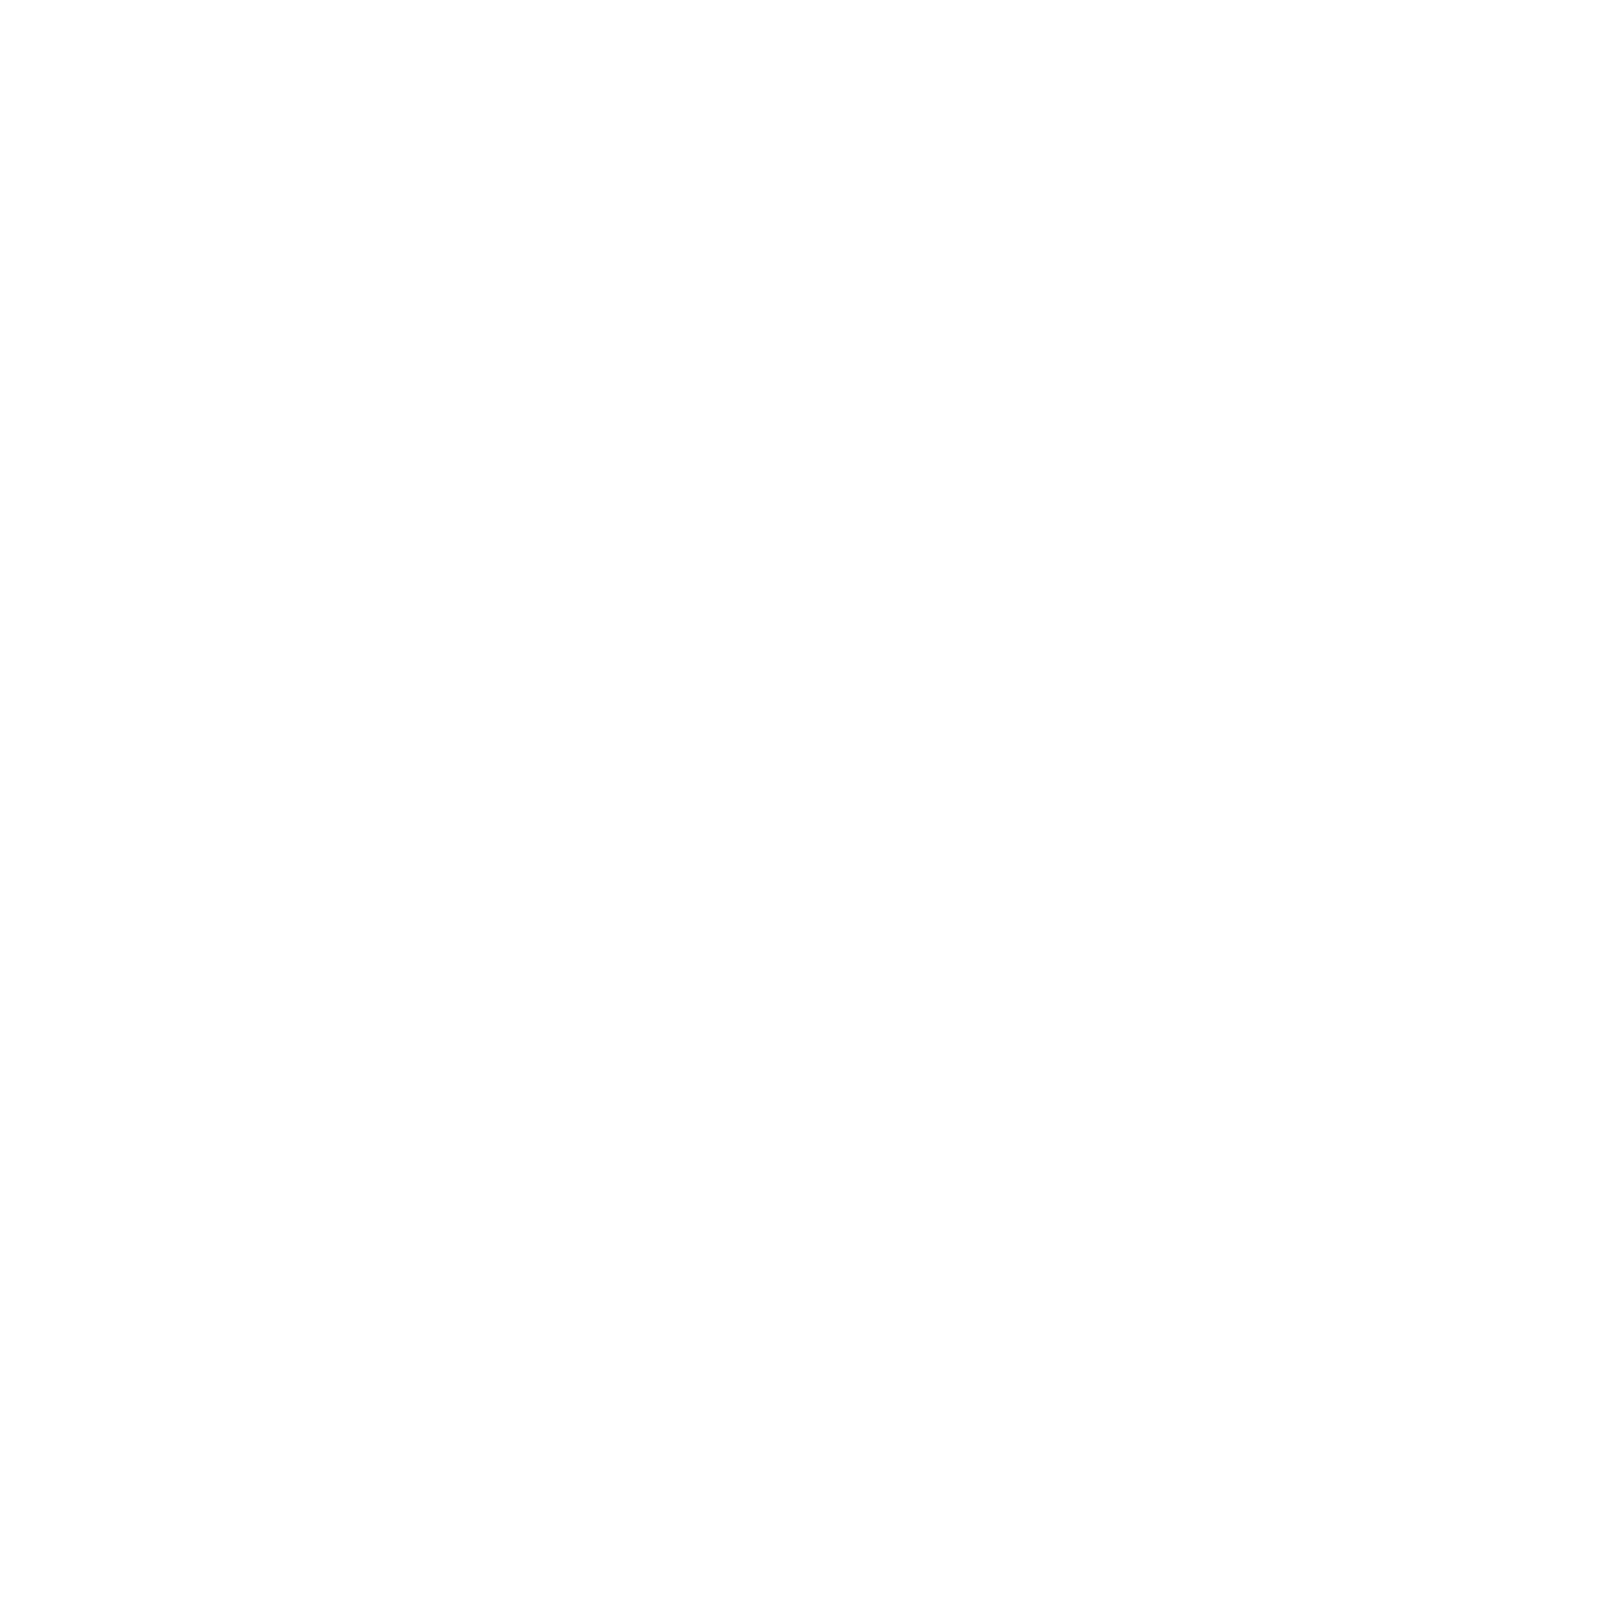 The Female Founders Mastermind logo by Ashley Deland